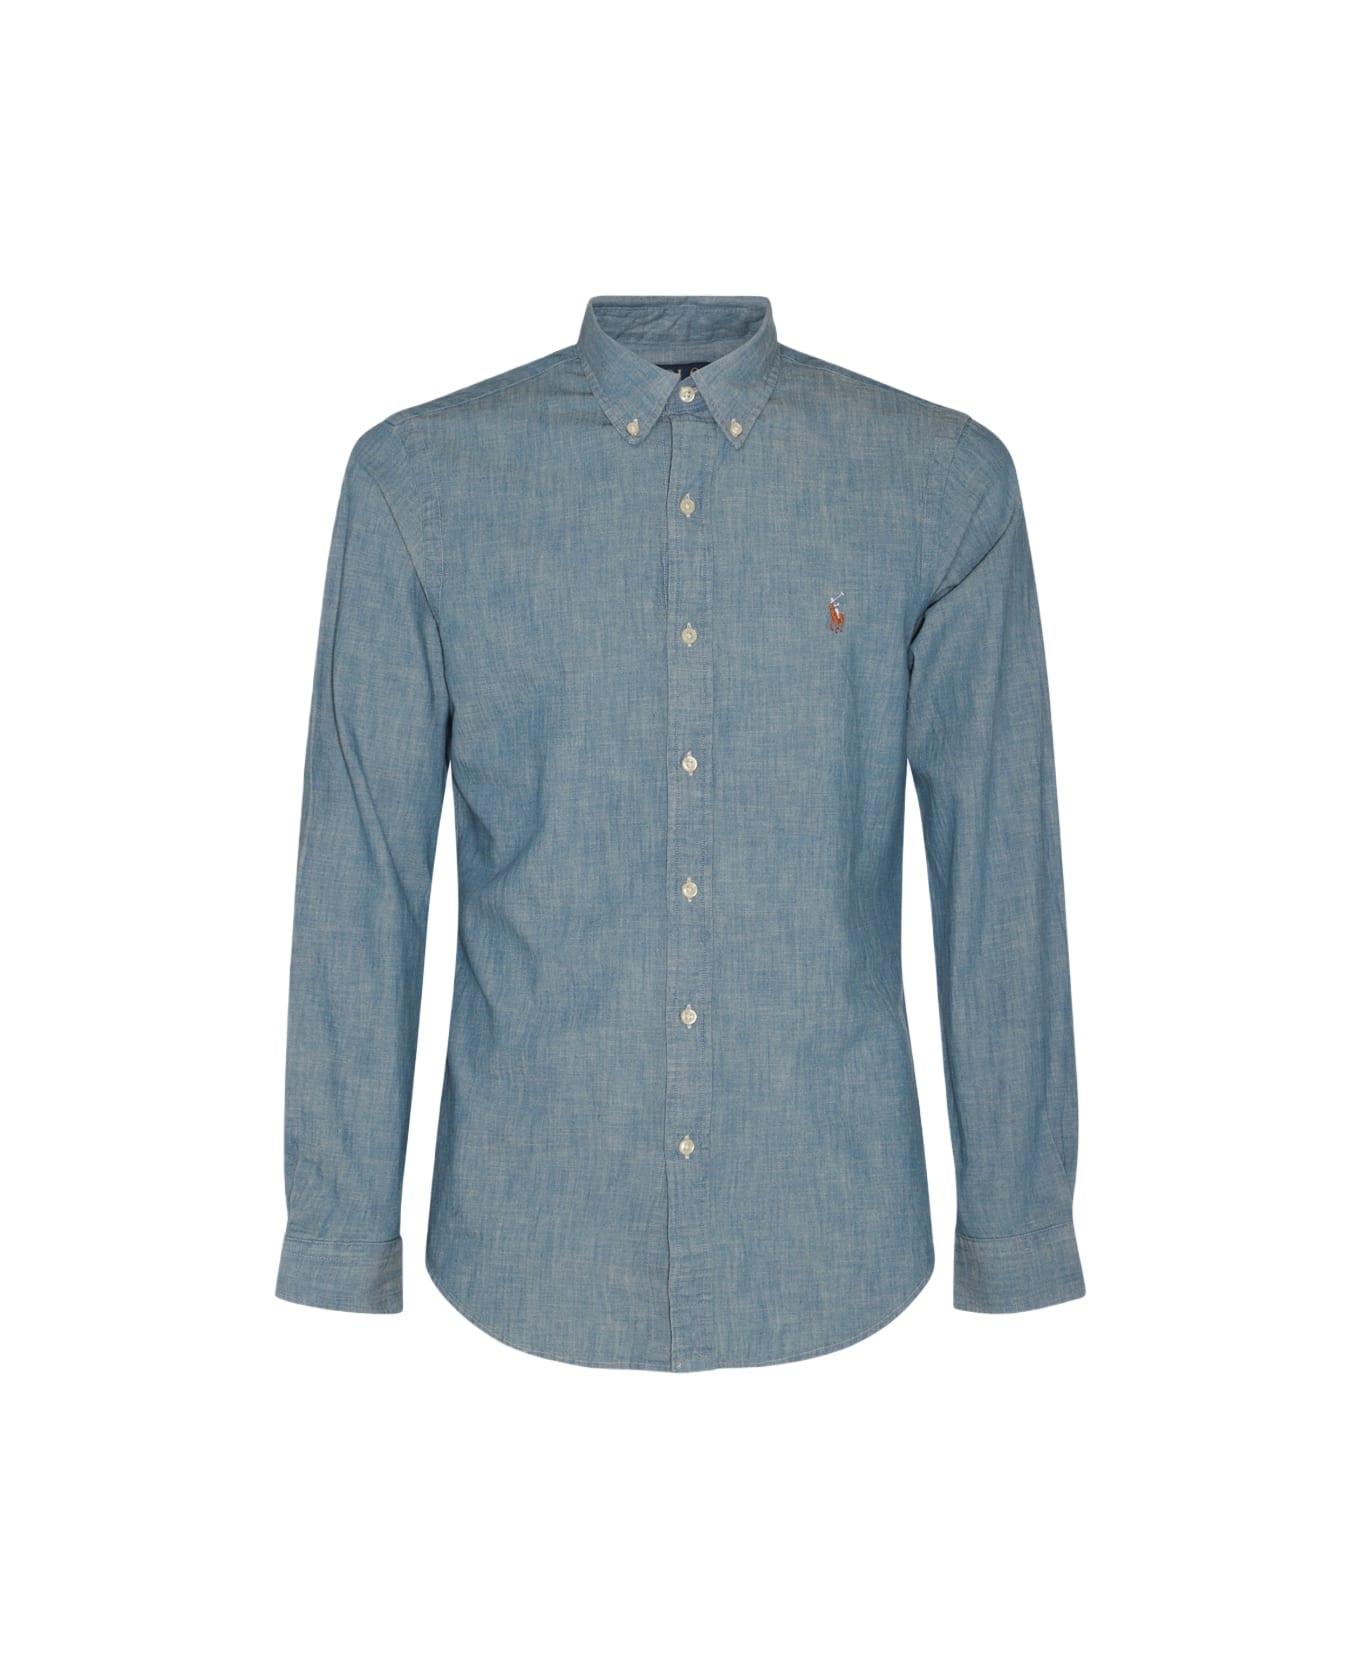 Polo Ralph Lauren Blue Denim Cotton Shirt - CHAMBRAY